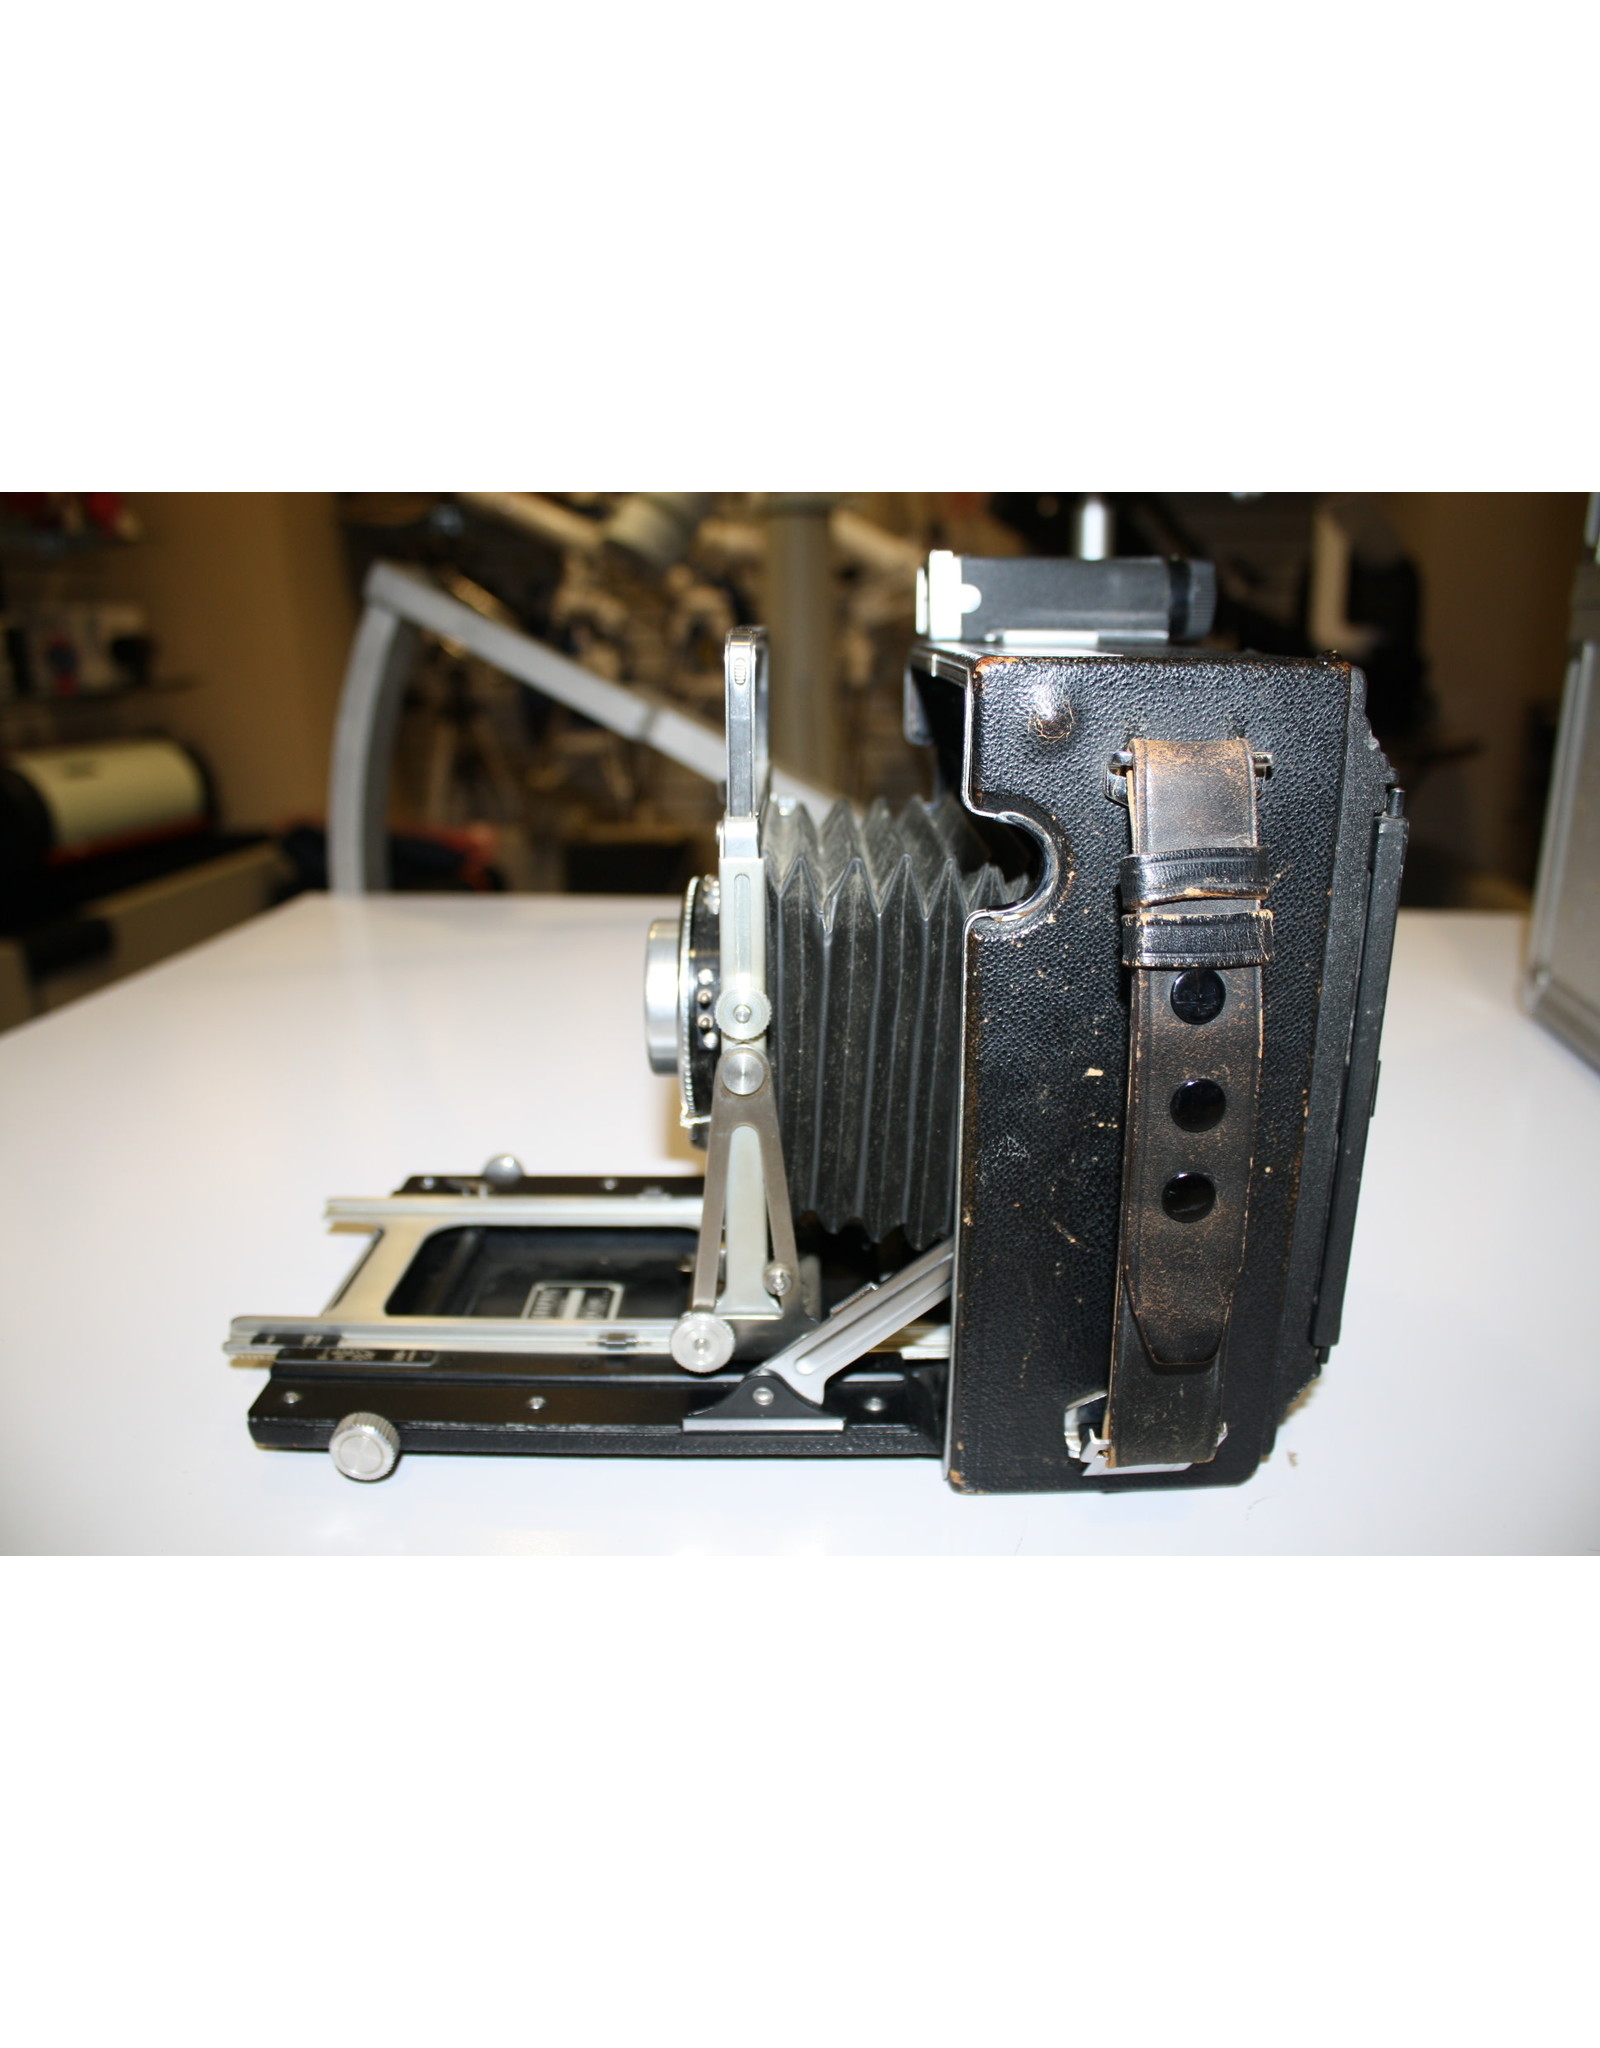 Graflex Crown Graphic 4x5 field camera, Kodak Ektar 127mm f4.7 Lens Outfit-Holders + Case AND MORE! CLEAN!